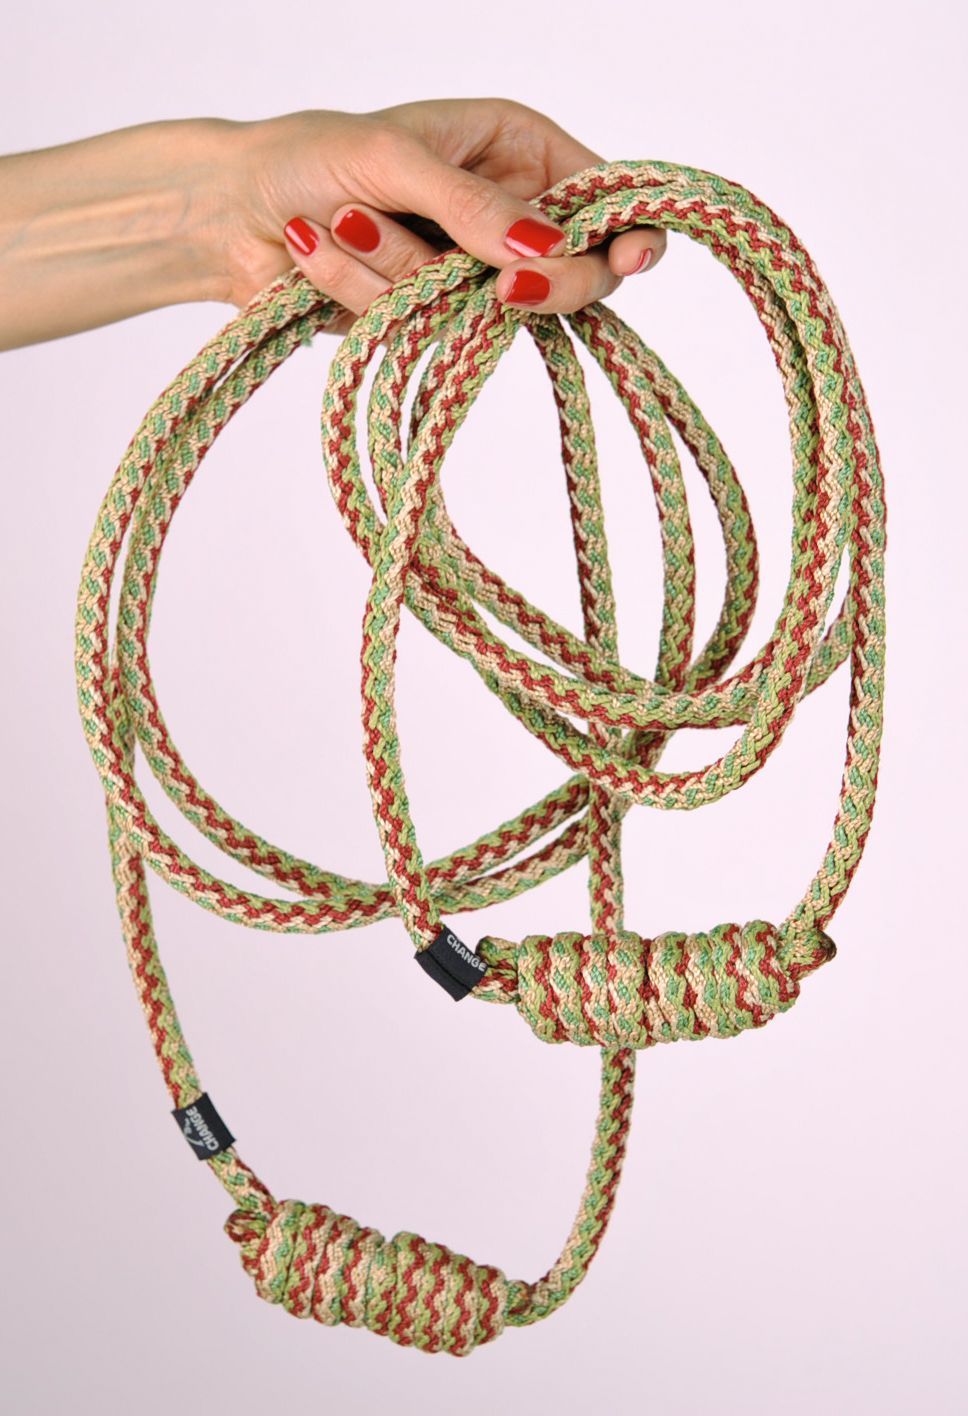 Caproic yoga rope photo 5